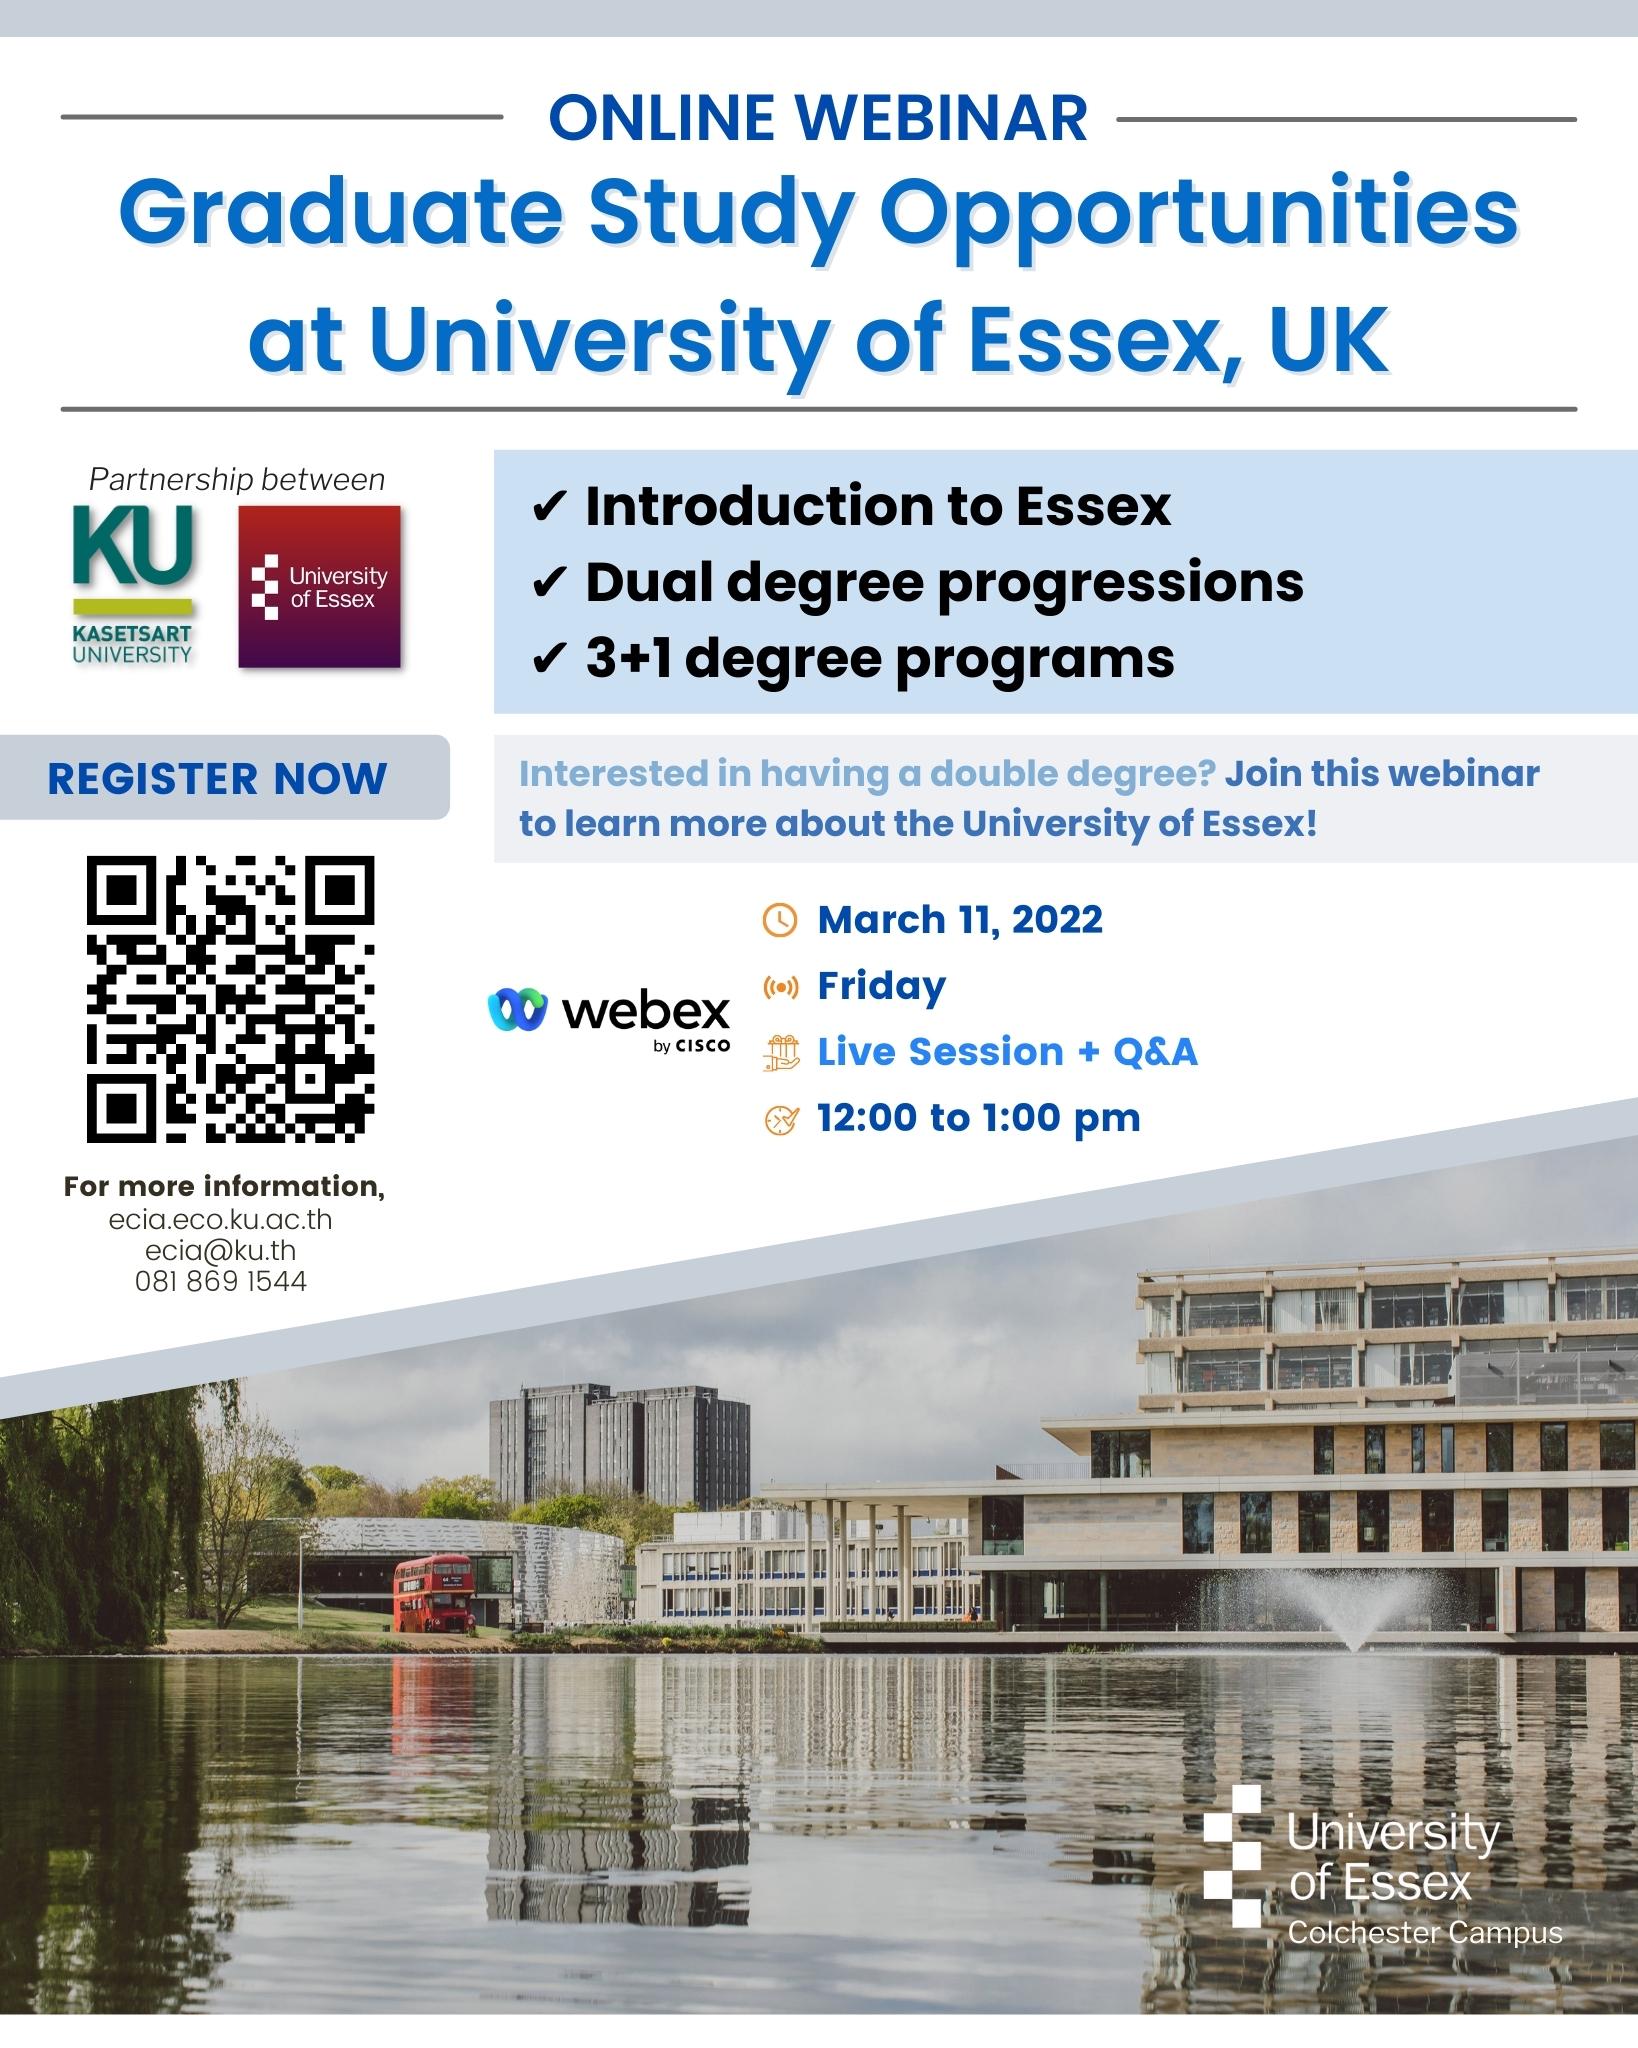 Online Webinar: Graduate Study Opportunities at University of Essex, UK - March 11, 2022